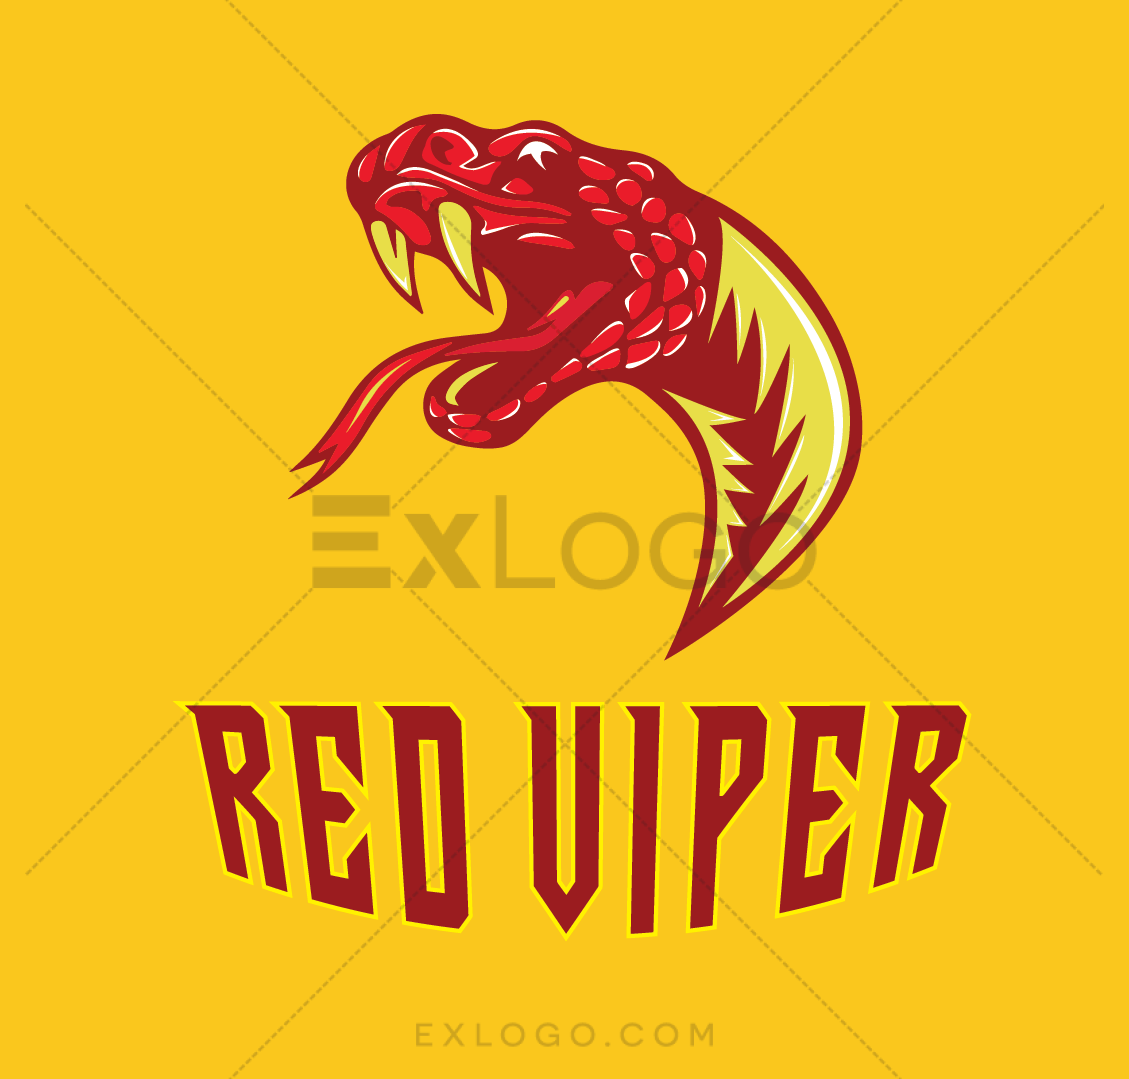 Red Viper Logo - Red Viper - ExLogoExLogo